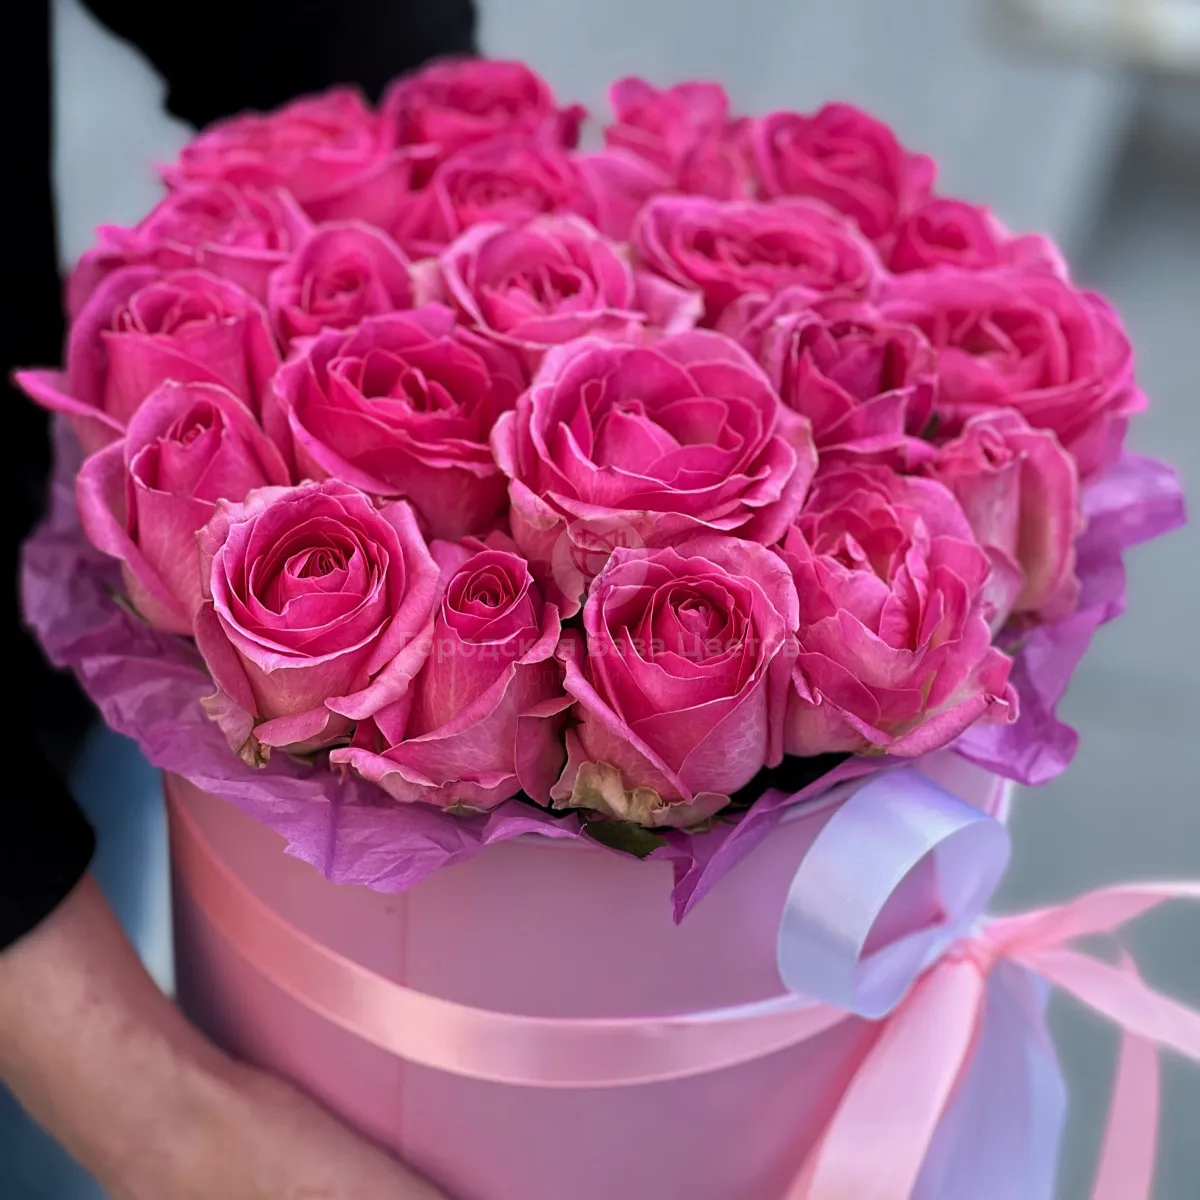 39 розовых роз (40 см)